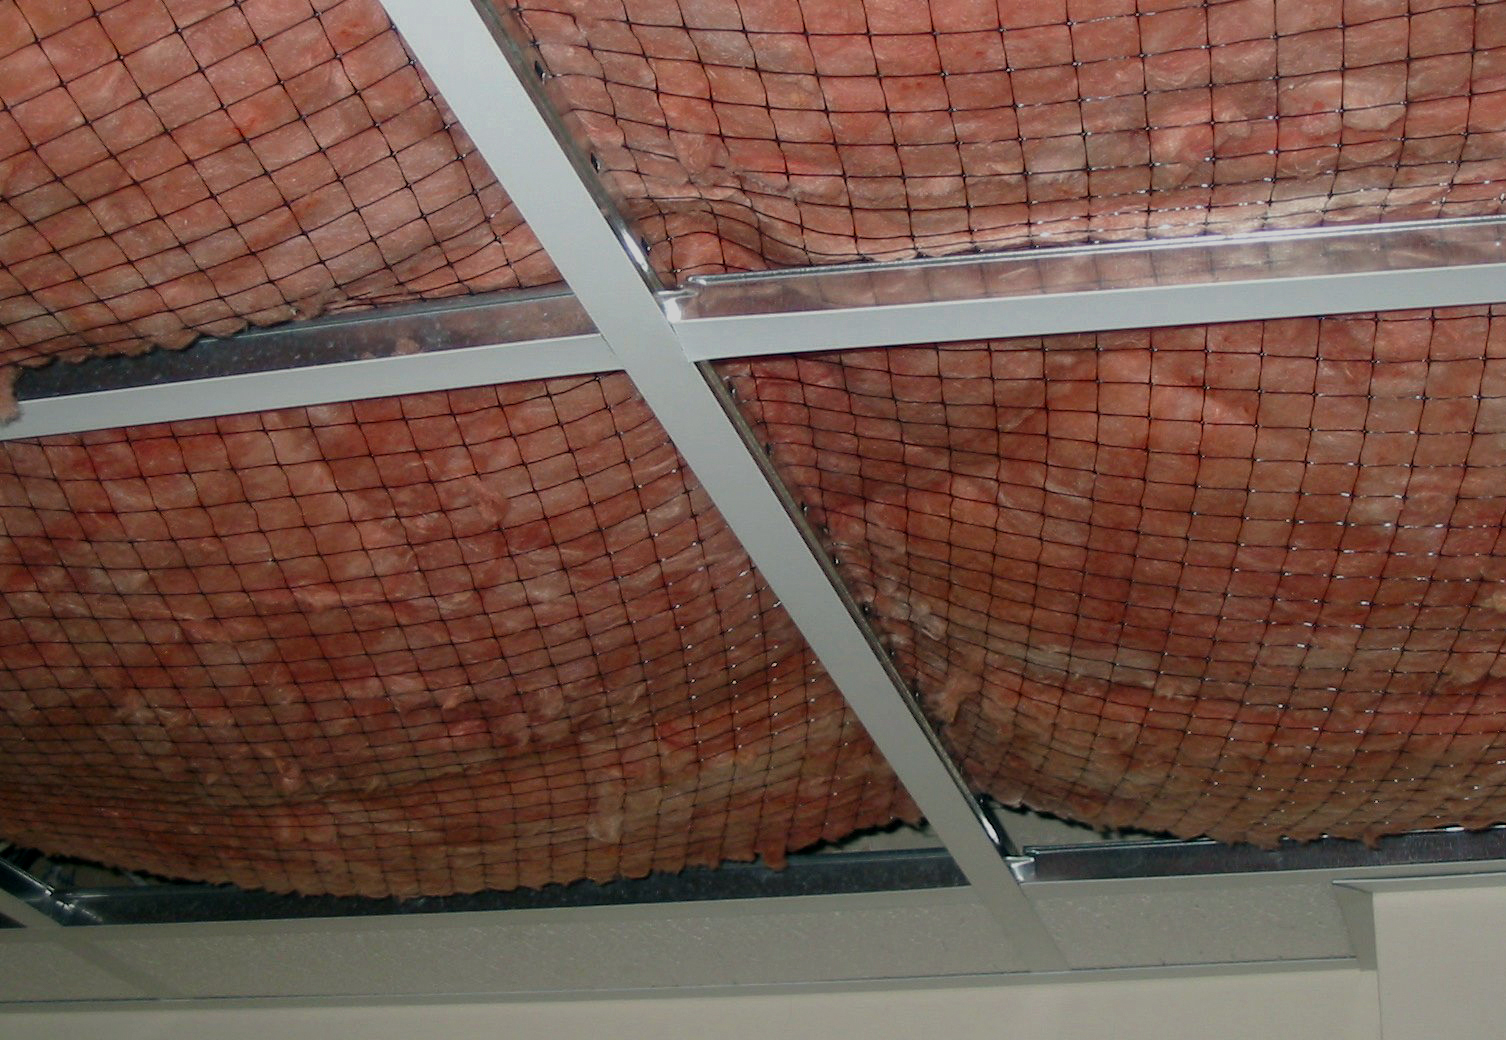 netting for insulation